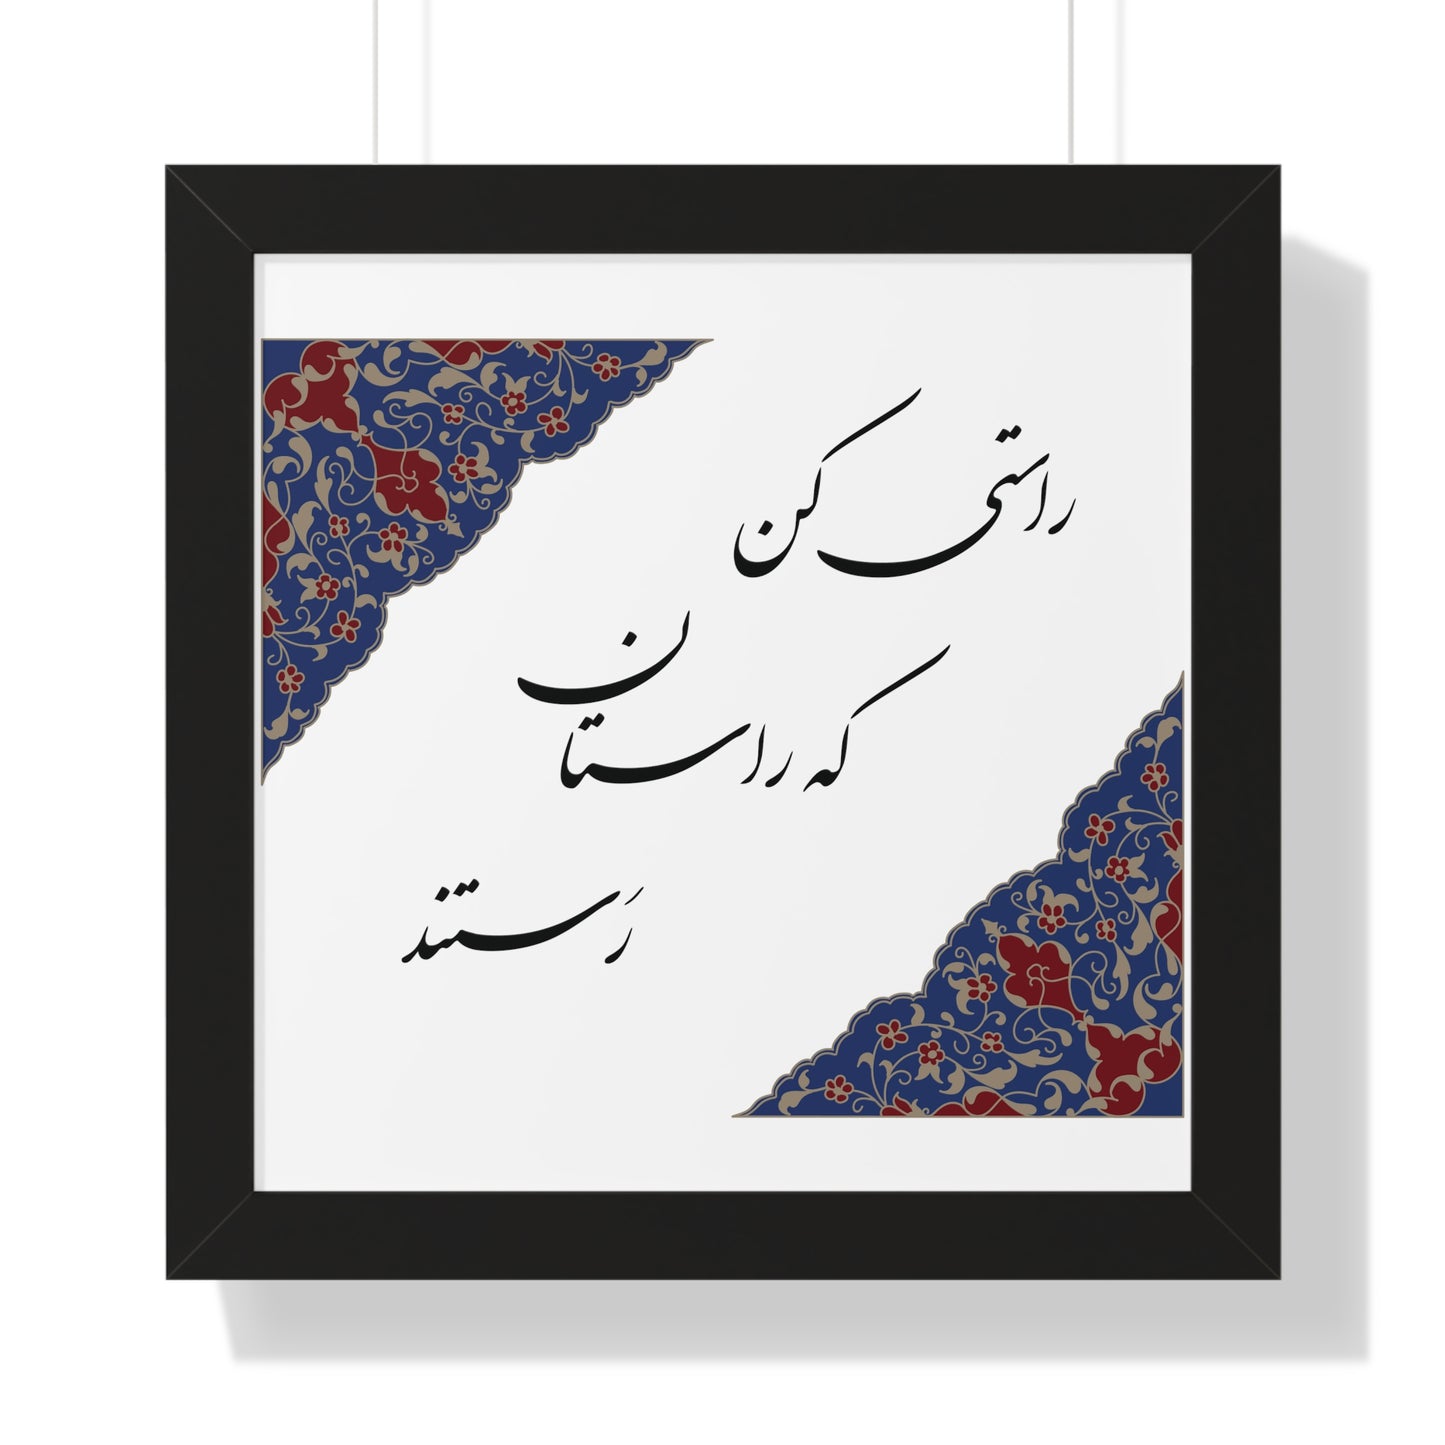 Framed Vertical Poster: دیوارکوب با تذهیب و شعر